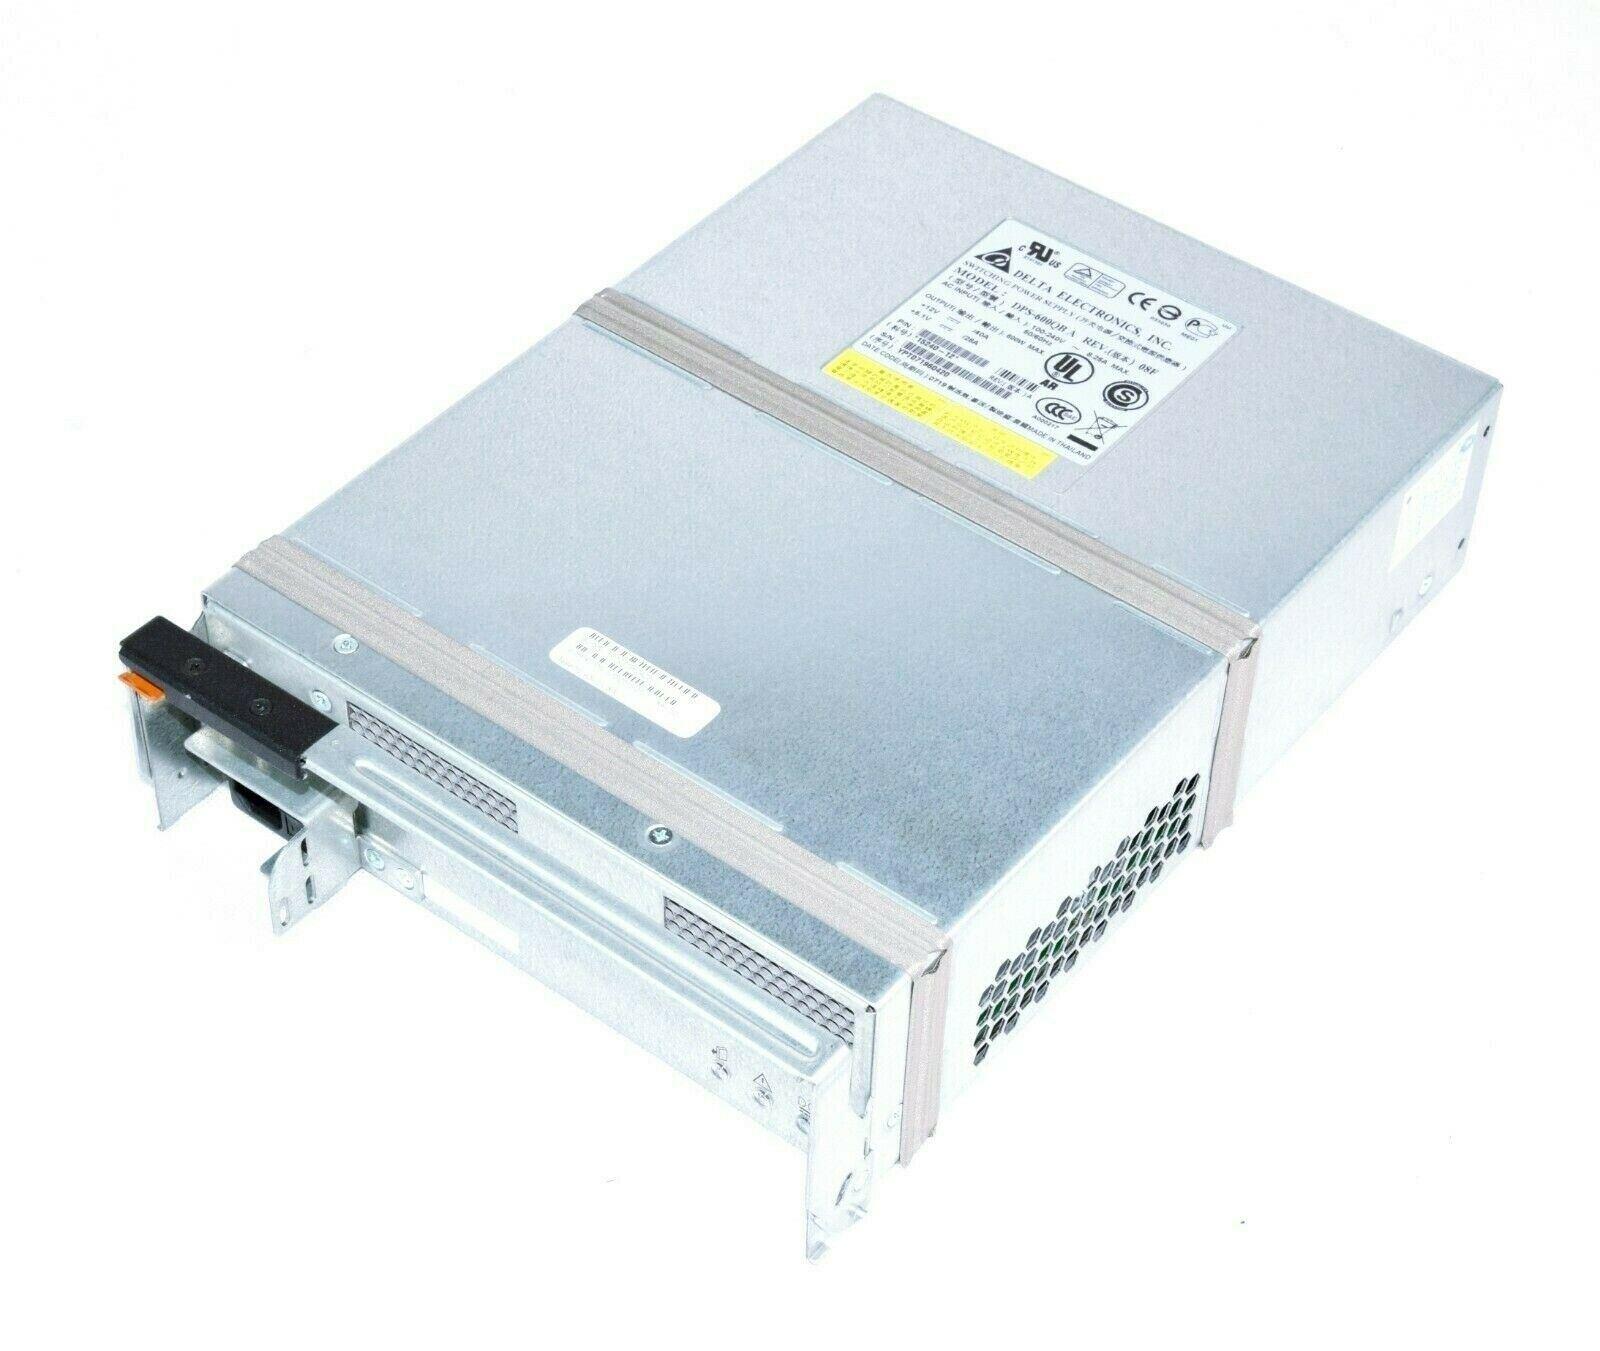 Ibm Dps-600qba – 600w Power Supply